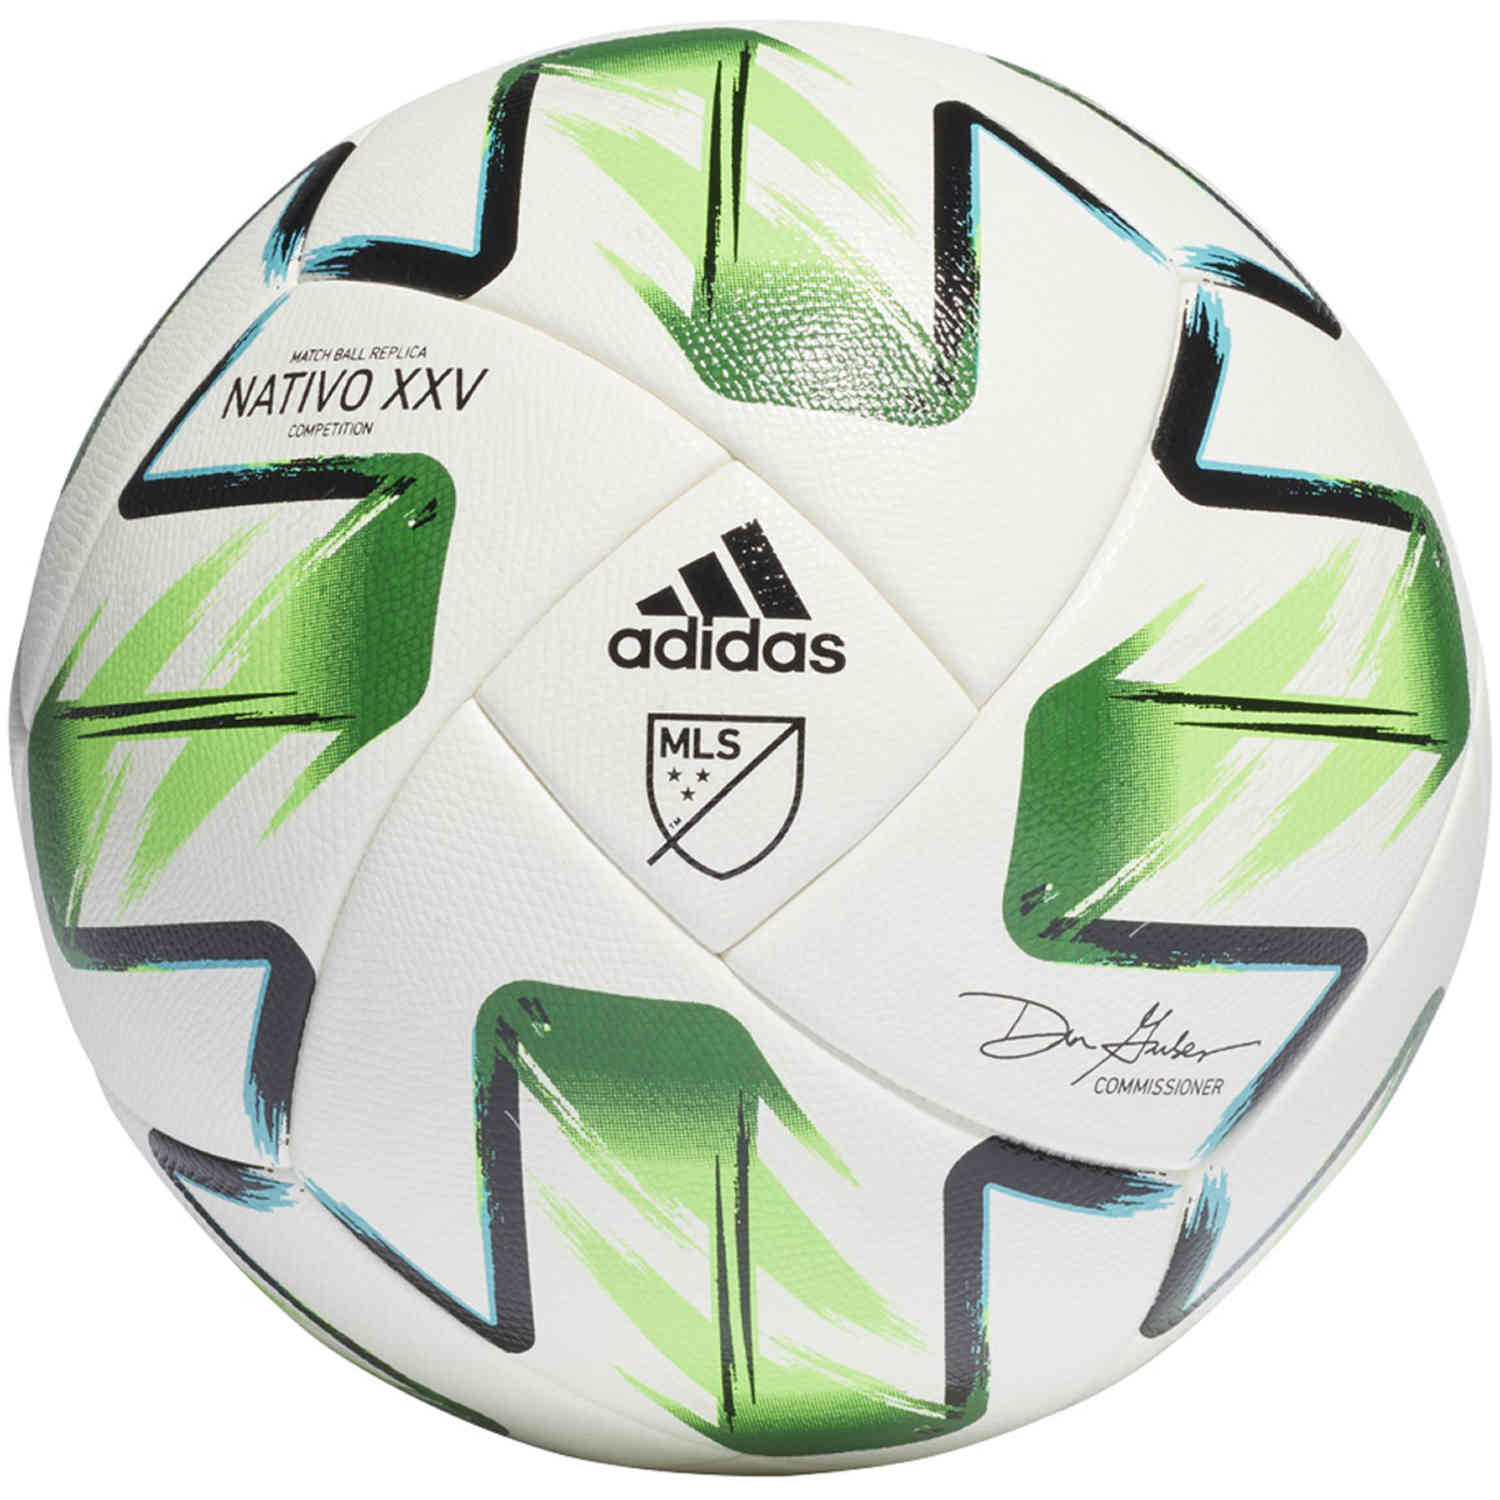 green adidas soccer ball